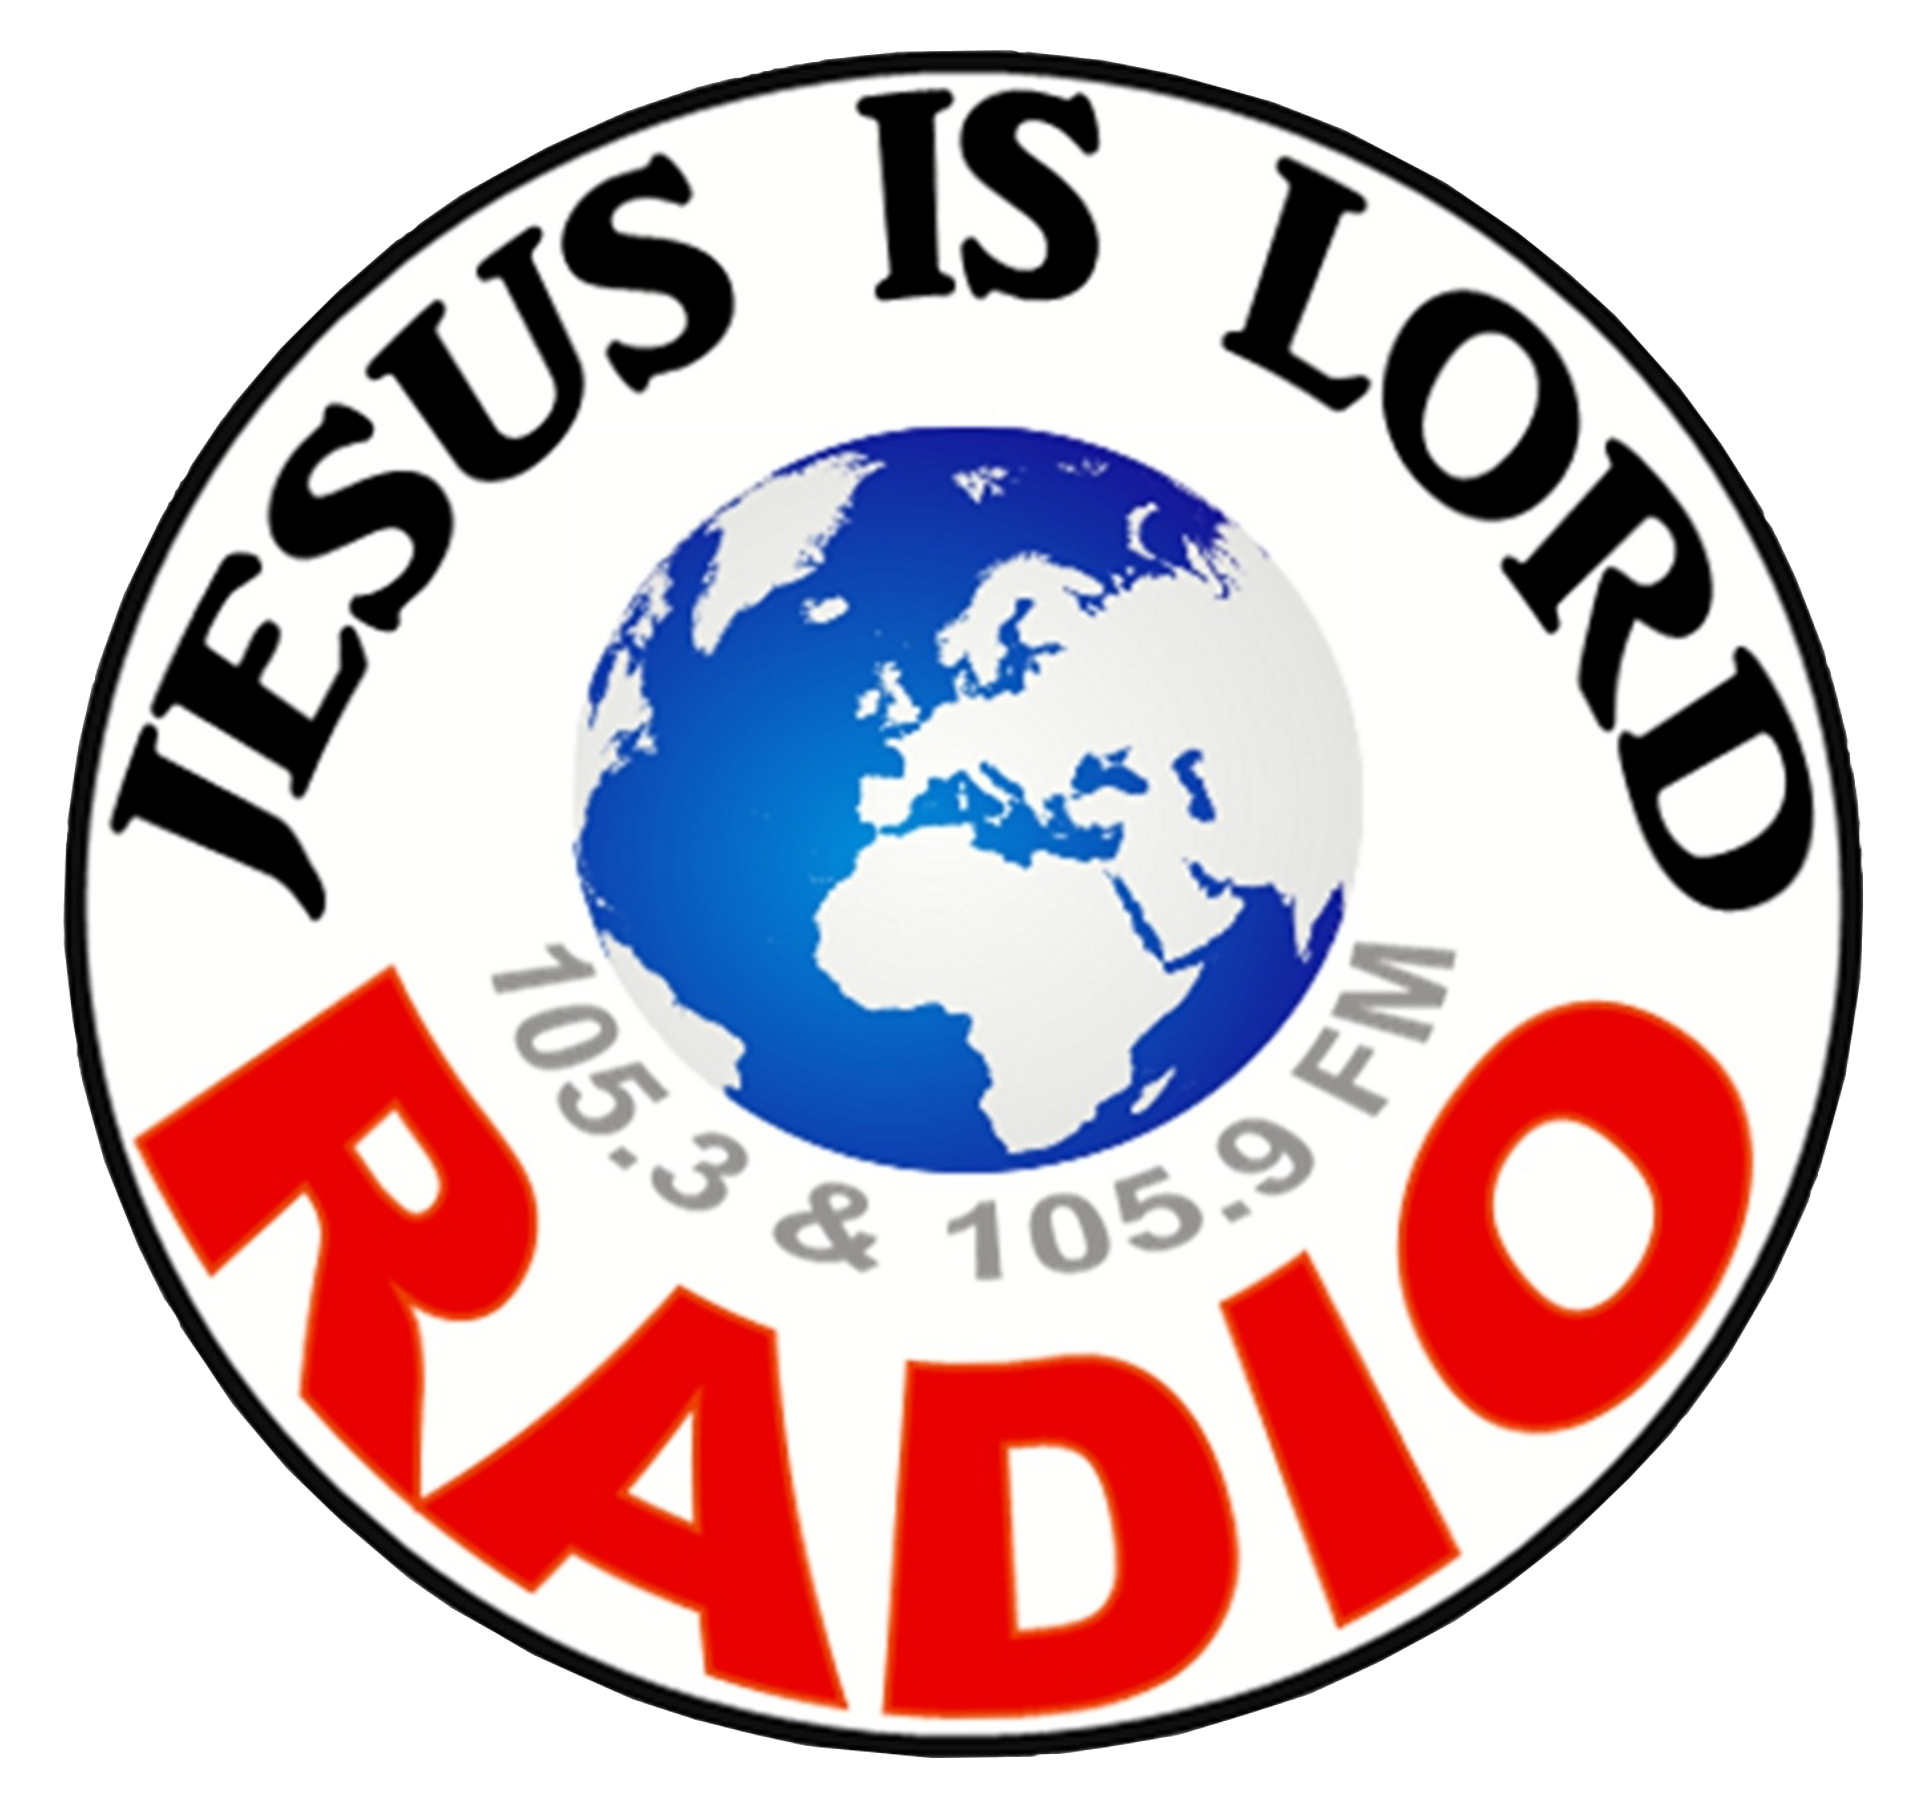 Jesusislordradio